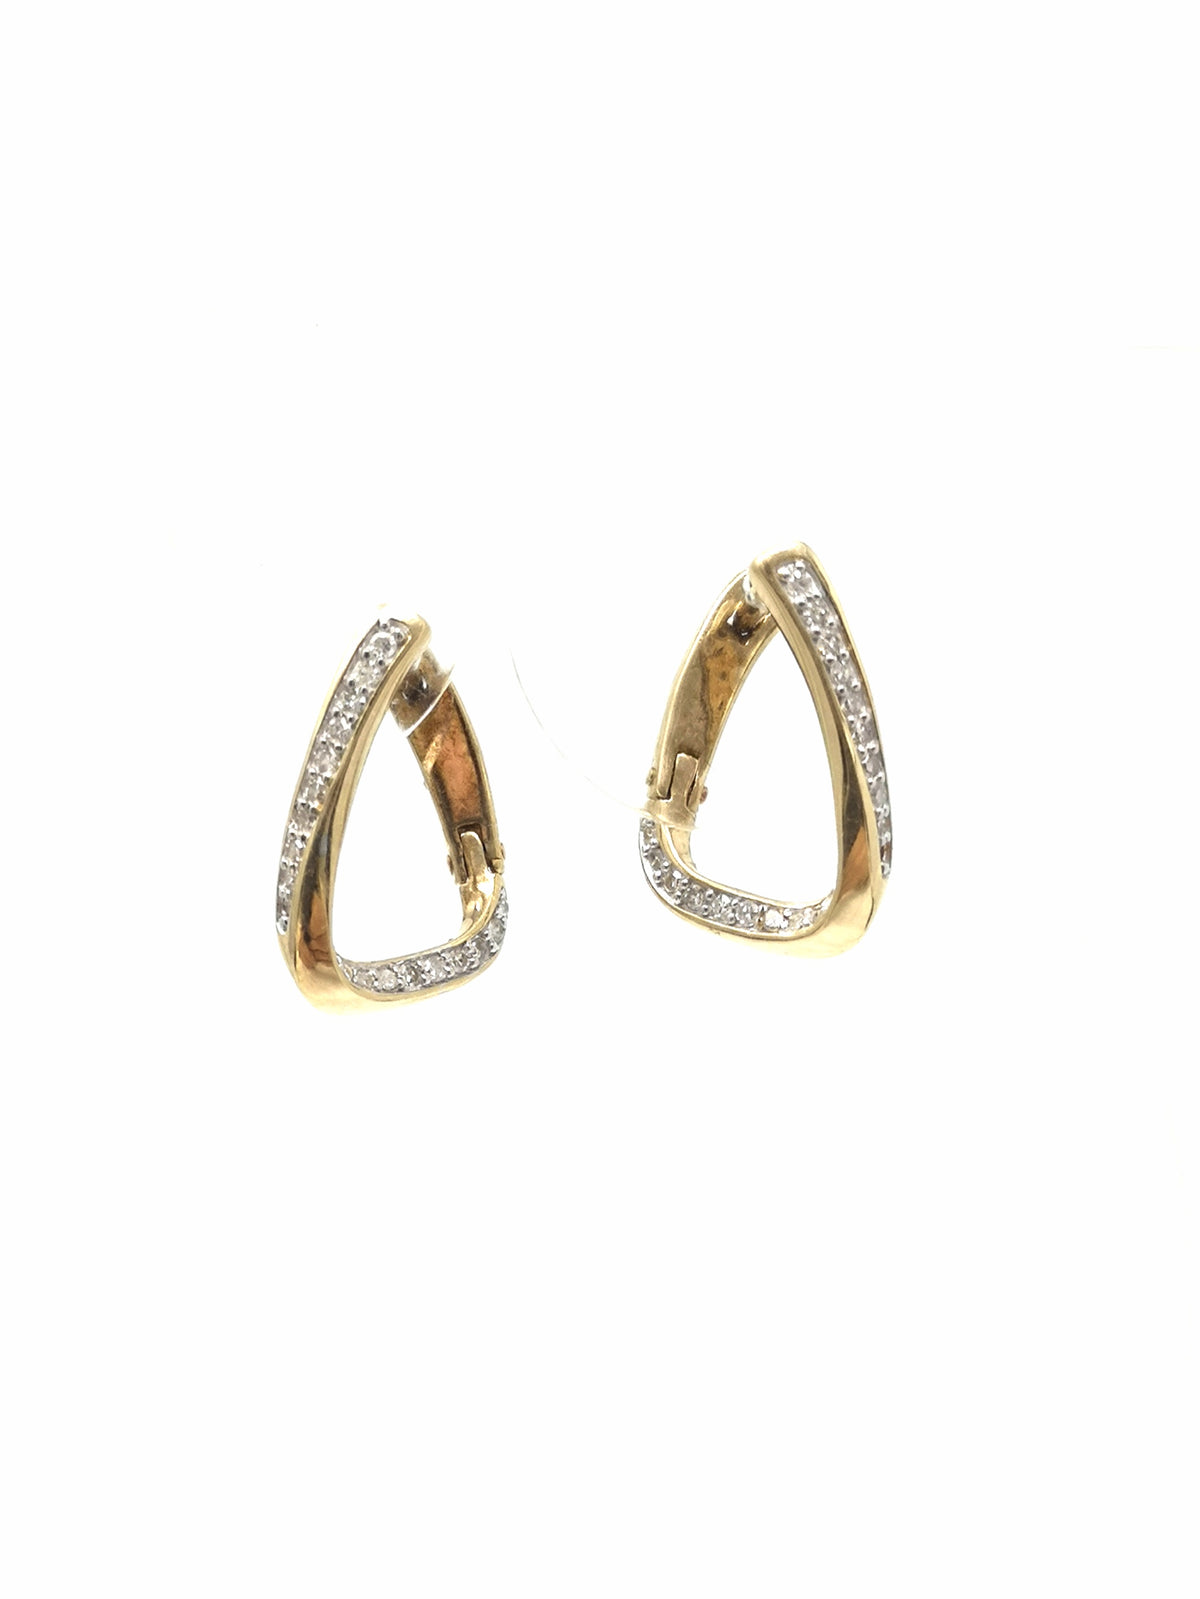 10K Yellow Gold 0.18cttw Diamond Earrings